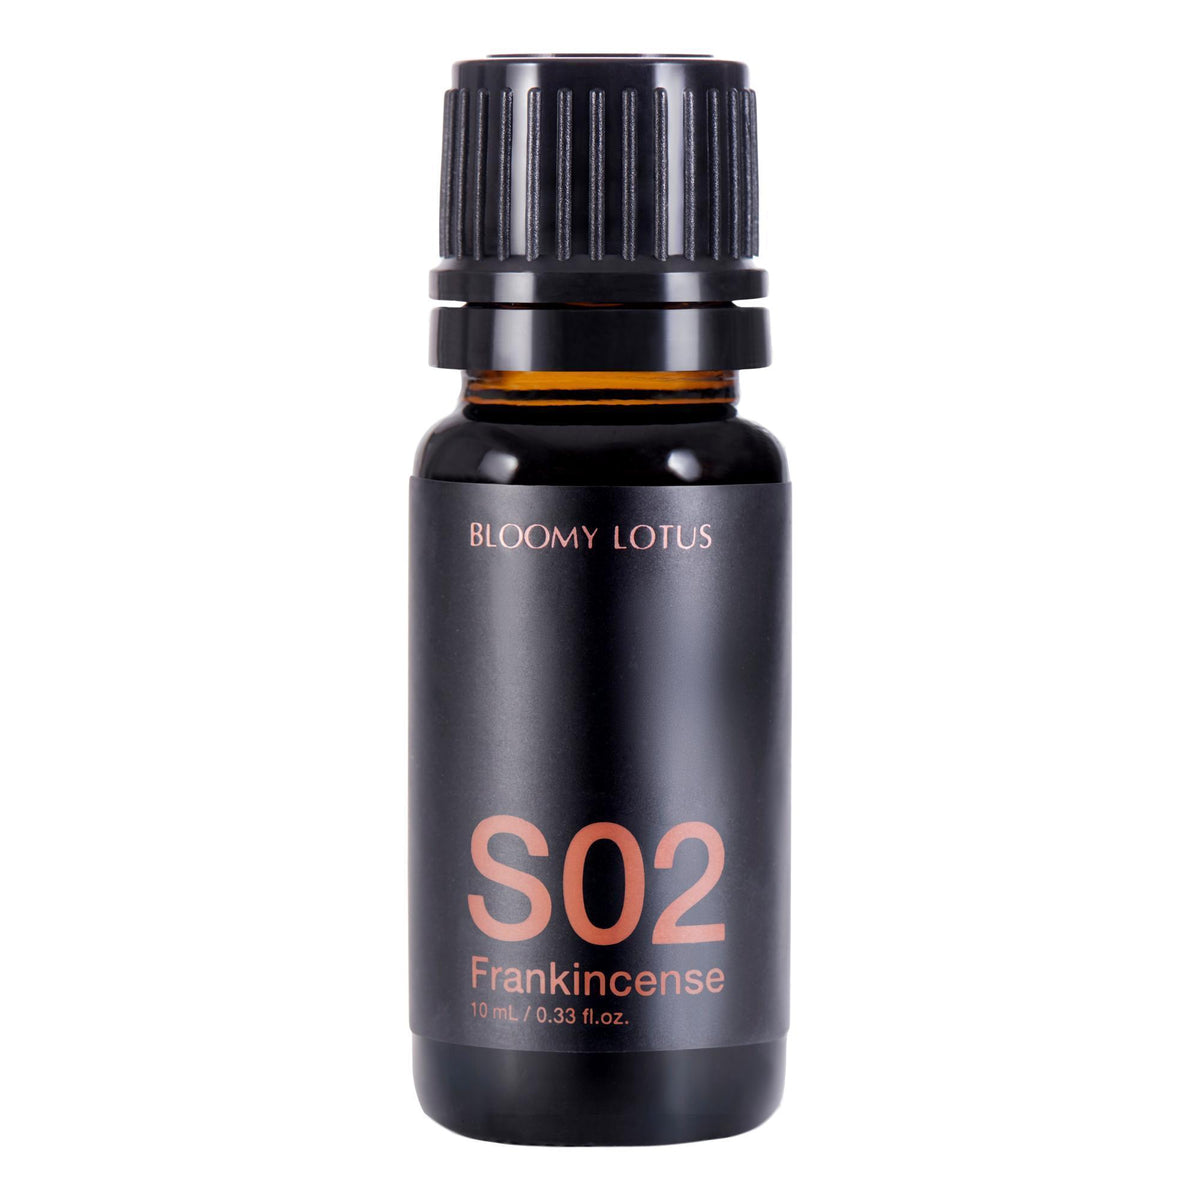 S02 Frankincense Essential Oil, 10 ml